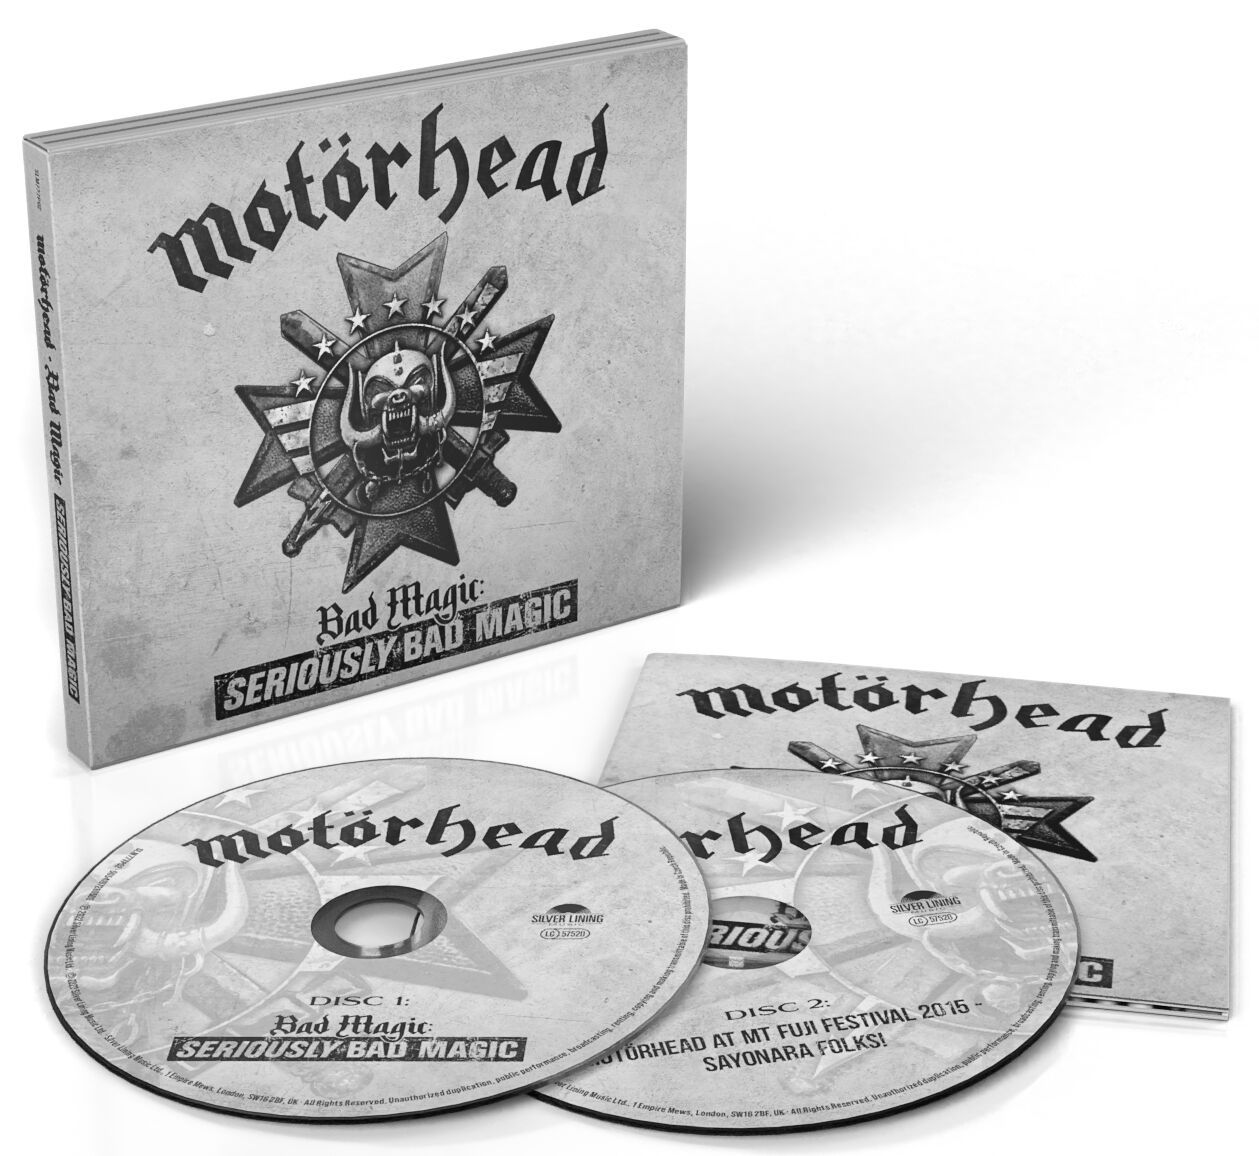 Bad magic: SERIOUSLY BAD MAGIC CD von Motörhead